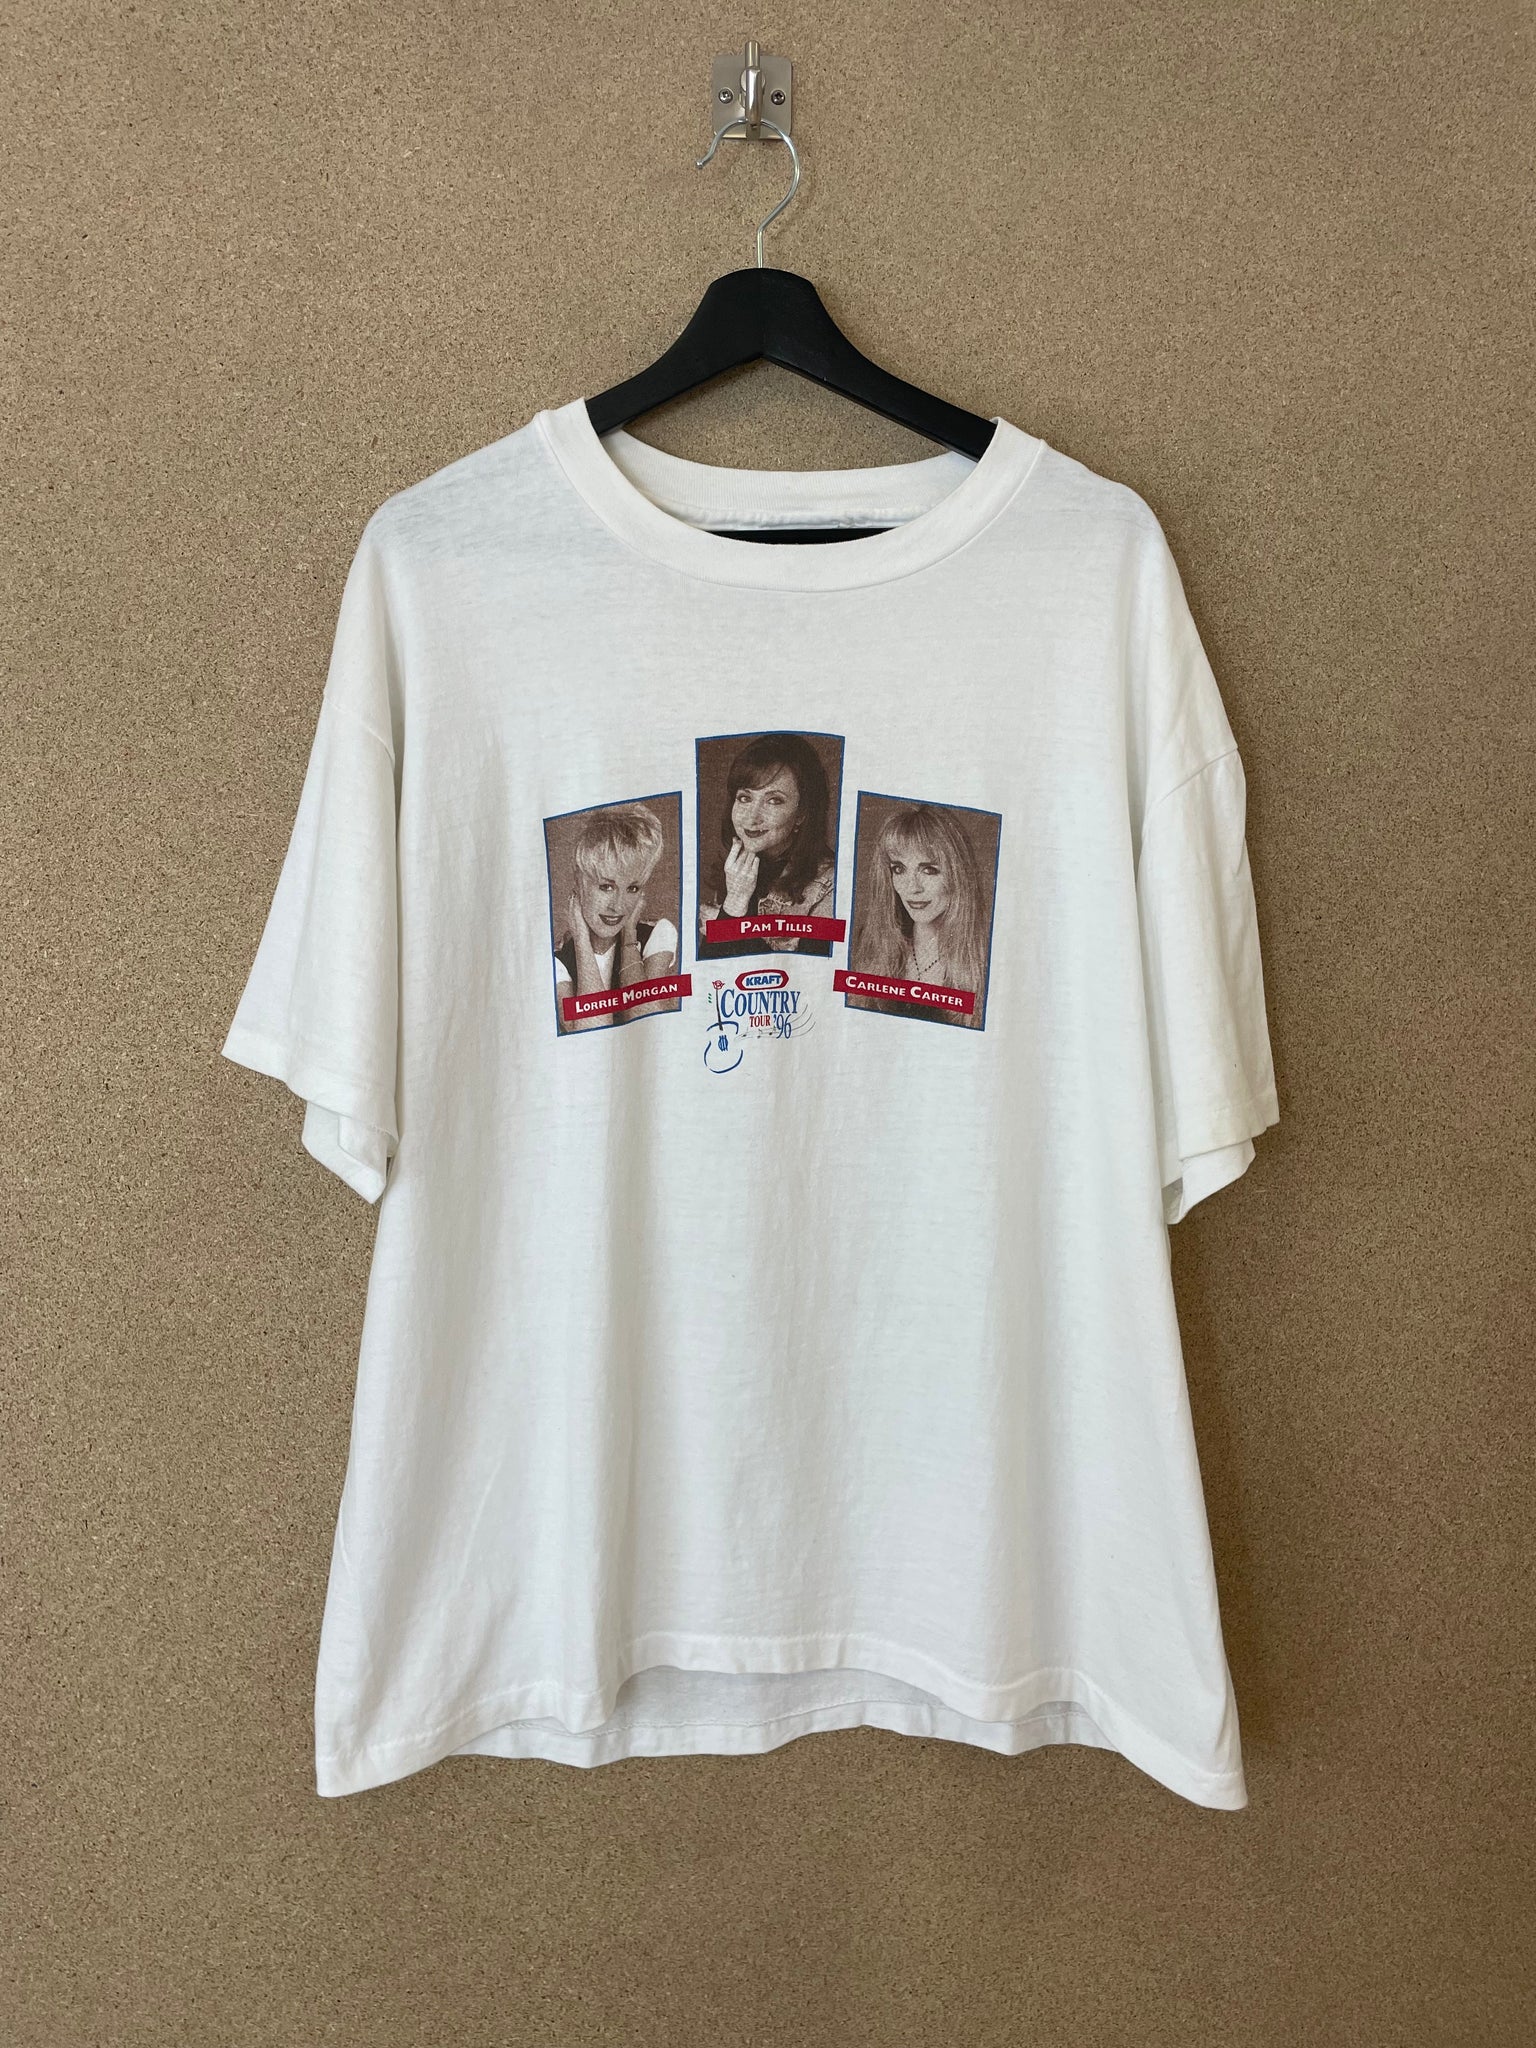 Vintage 1996 Kraft Country Music Tour T-shirt XL